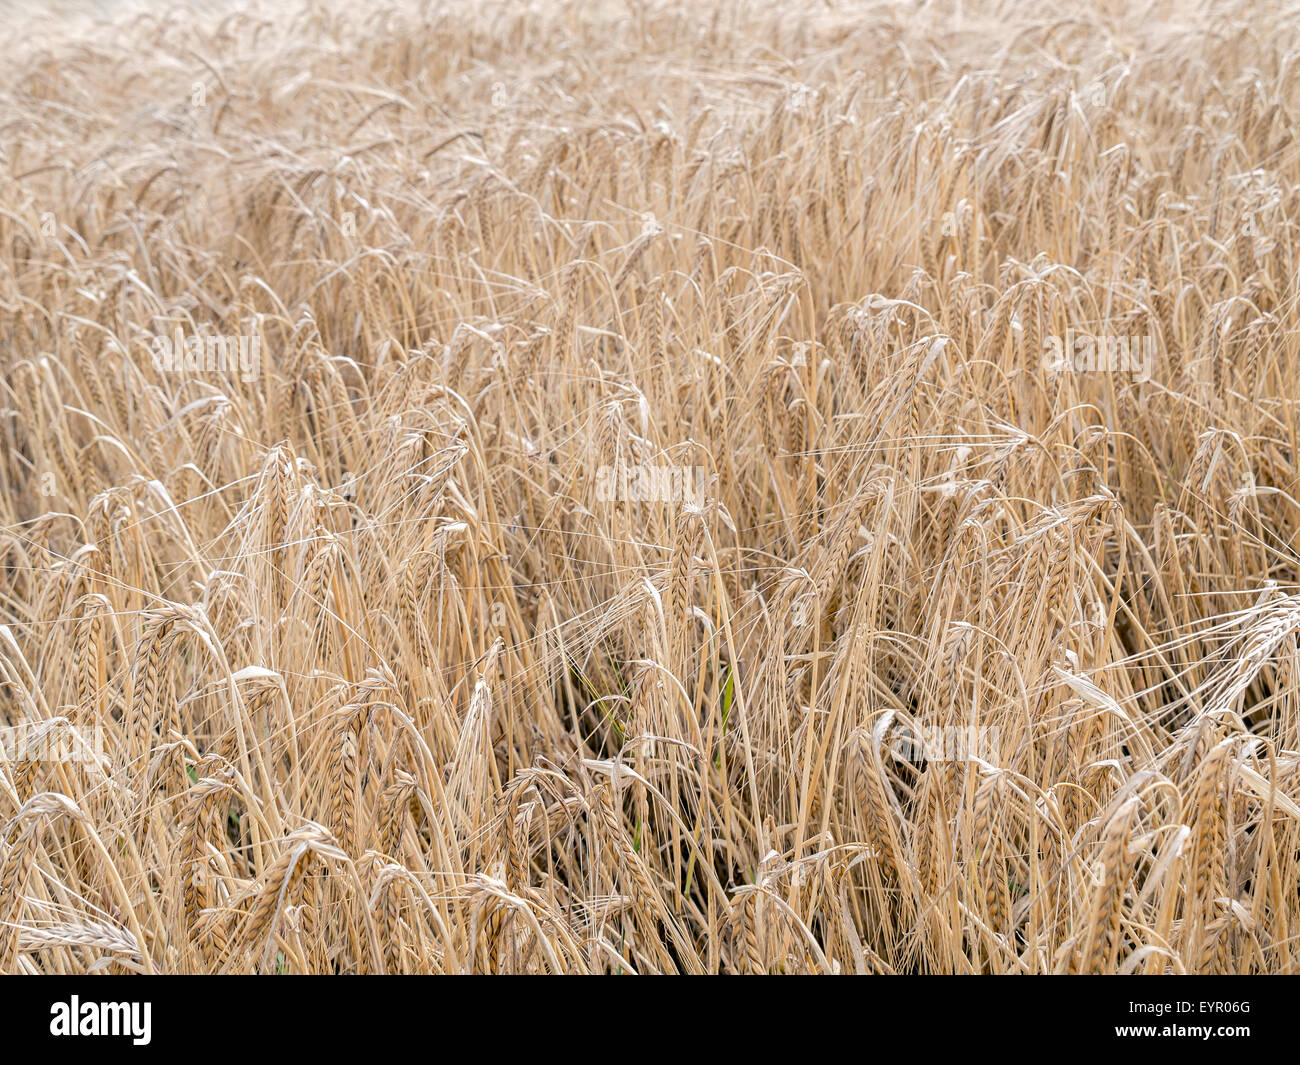 Field of ripened wheat Stock Photo